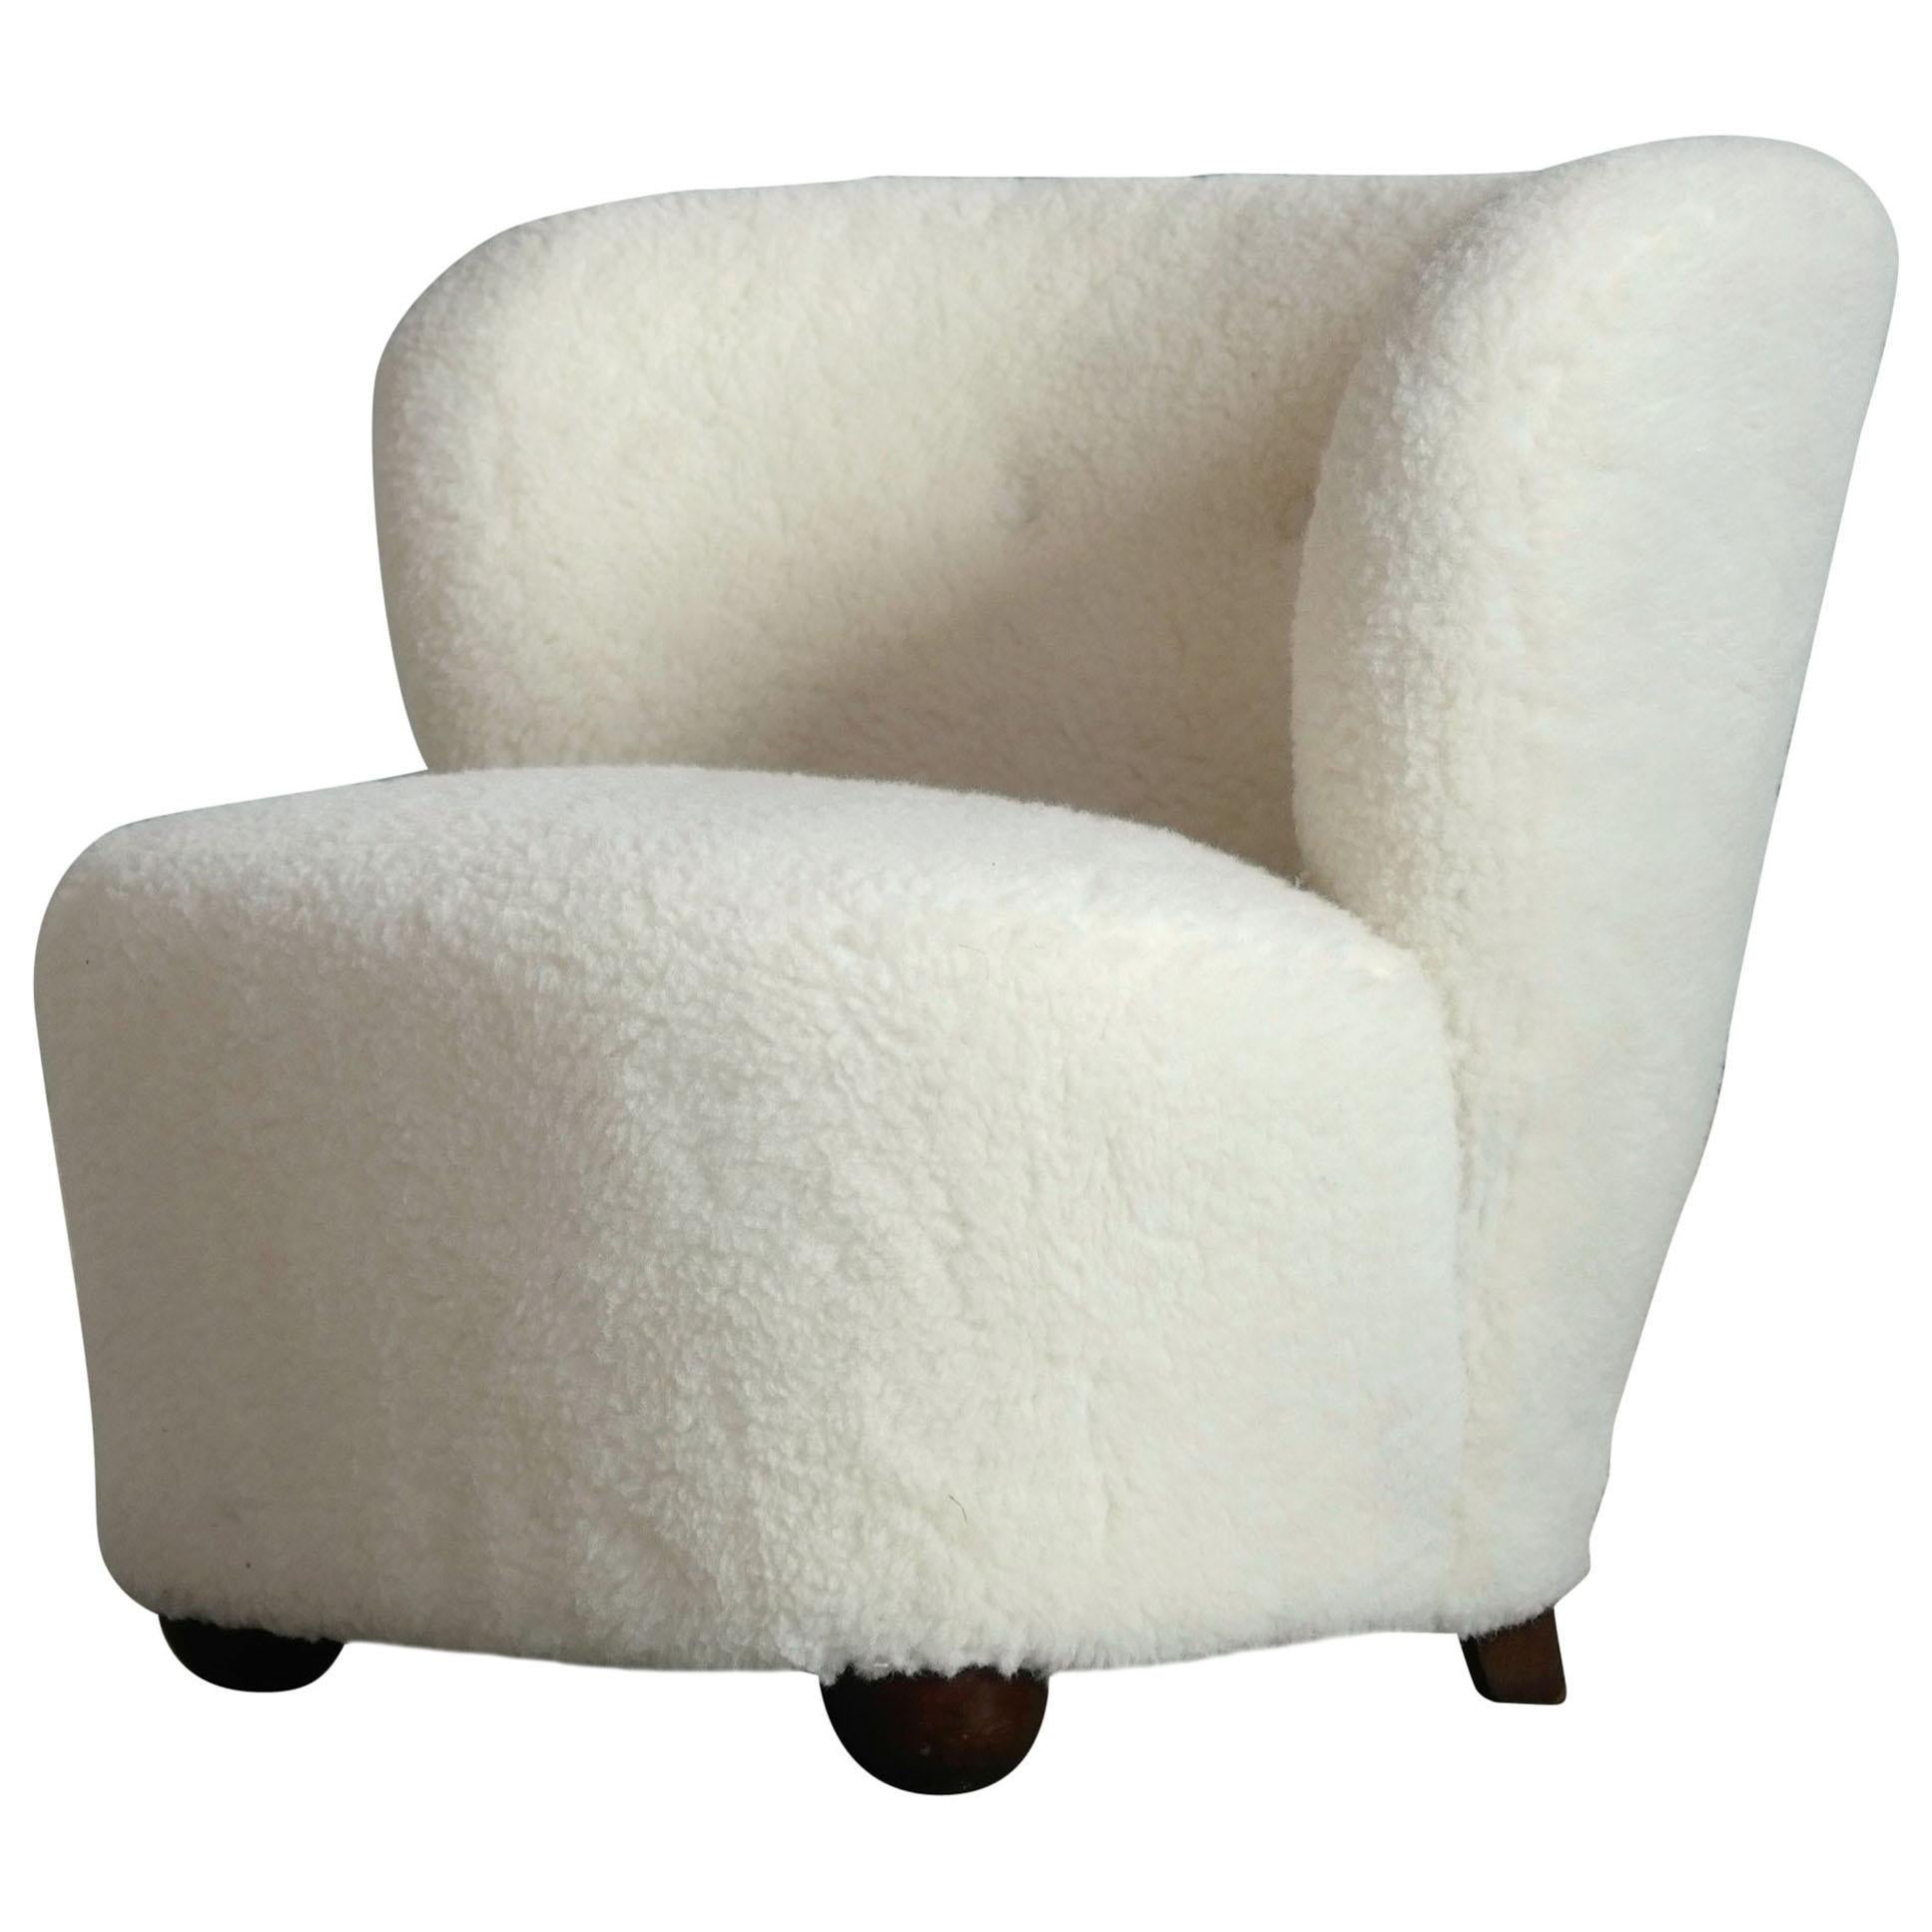 Danish 1940s Fritz Hansen Lounge or Slipper Chair Newly Upholstered in Lambswool